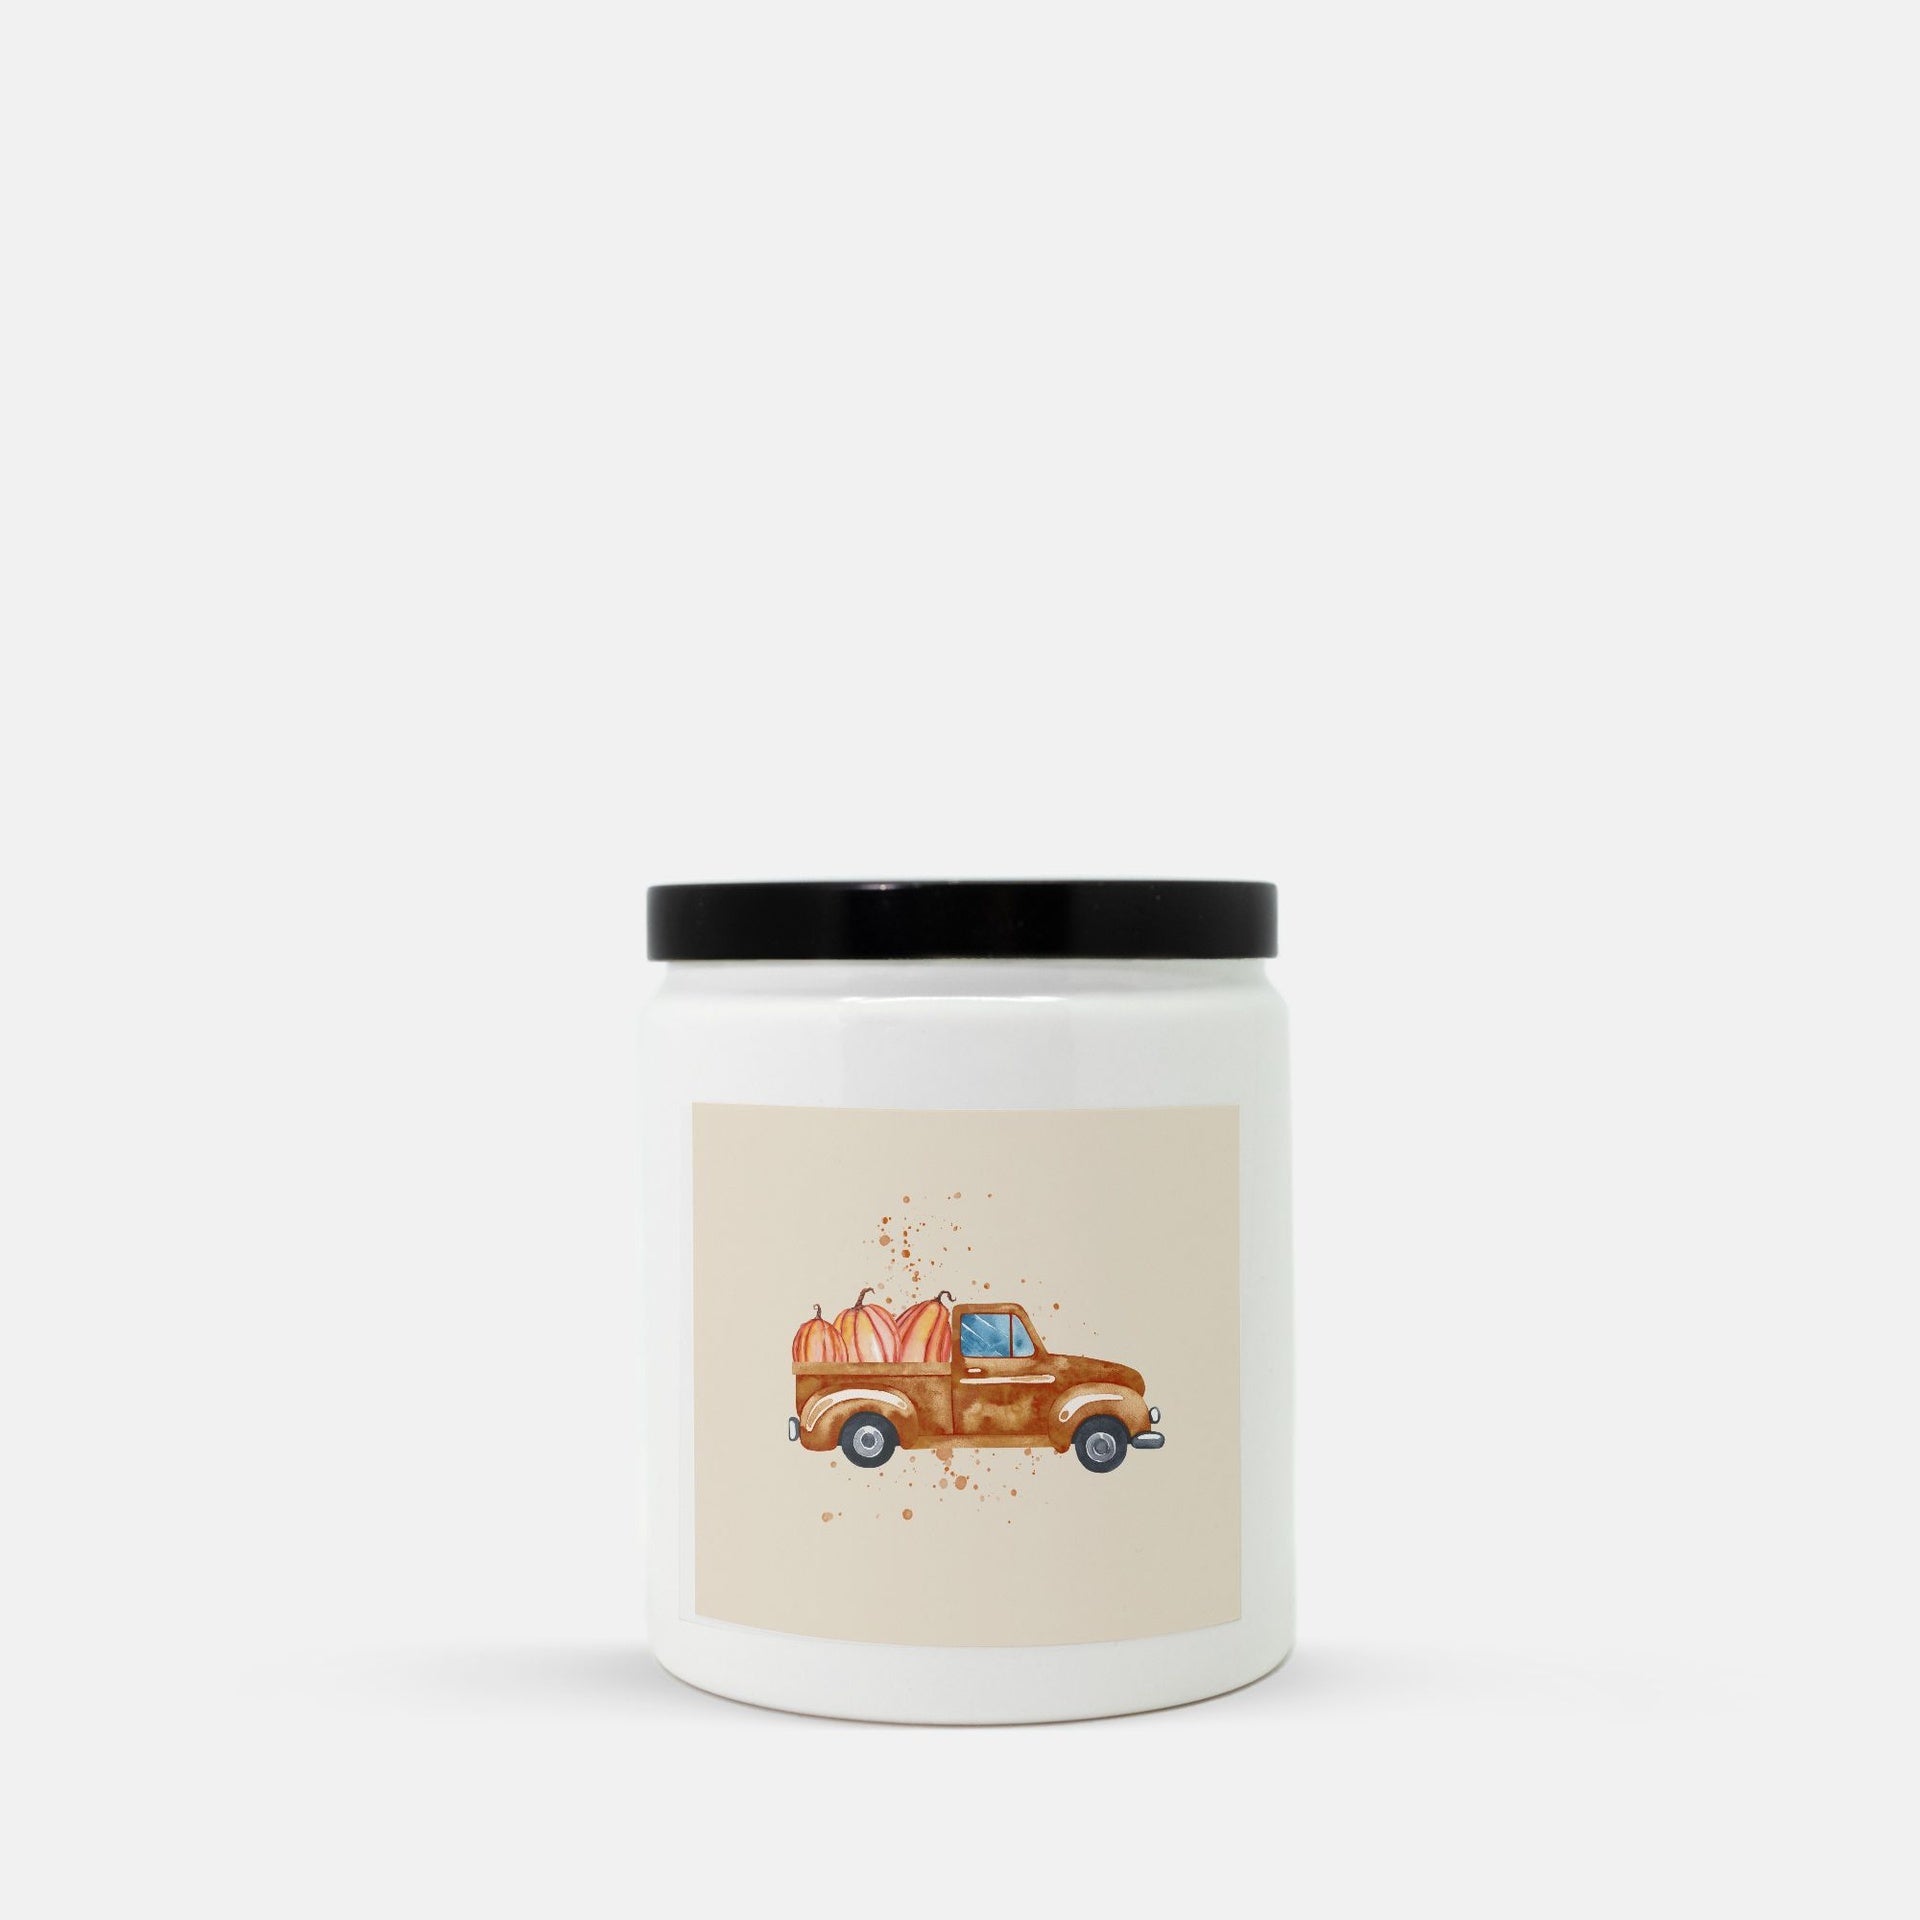 Lifestyle Details - Brown Rustic Truck & Pumpkins Ceramic Candle w Black Lid - Vanilla Bean